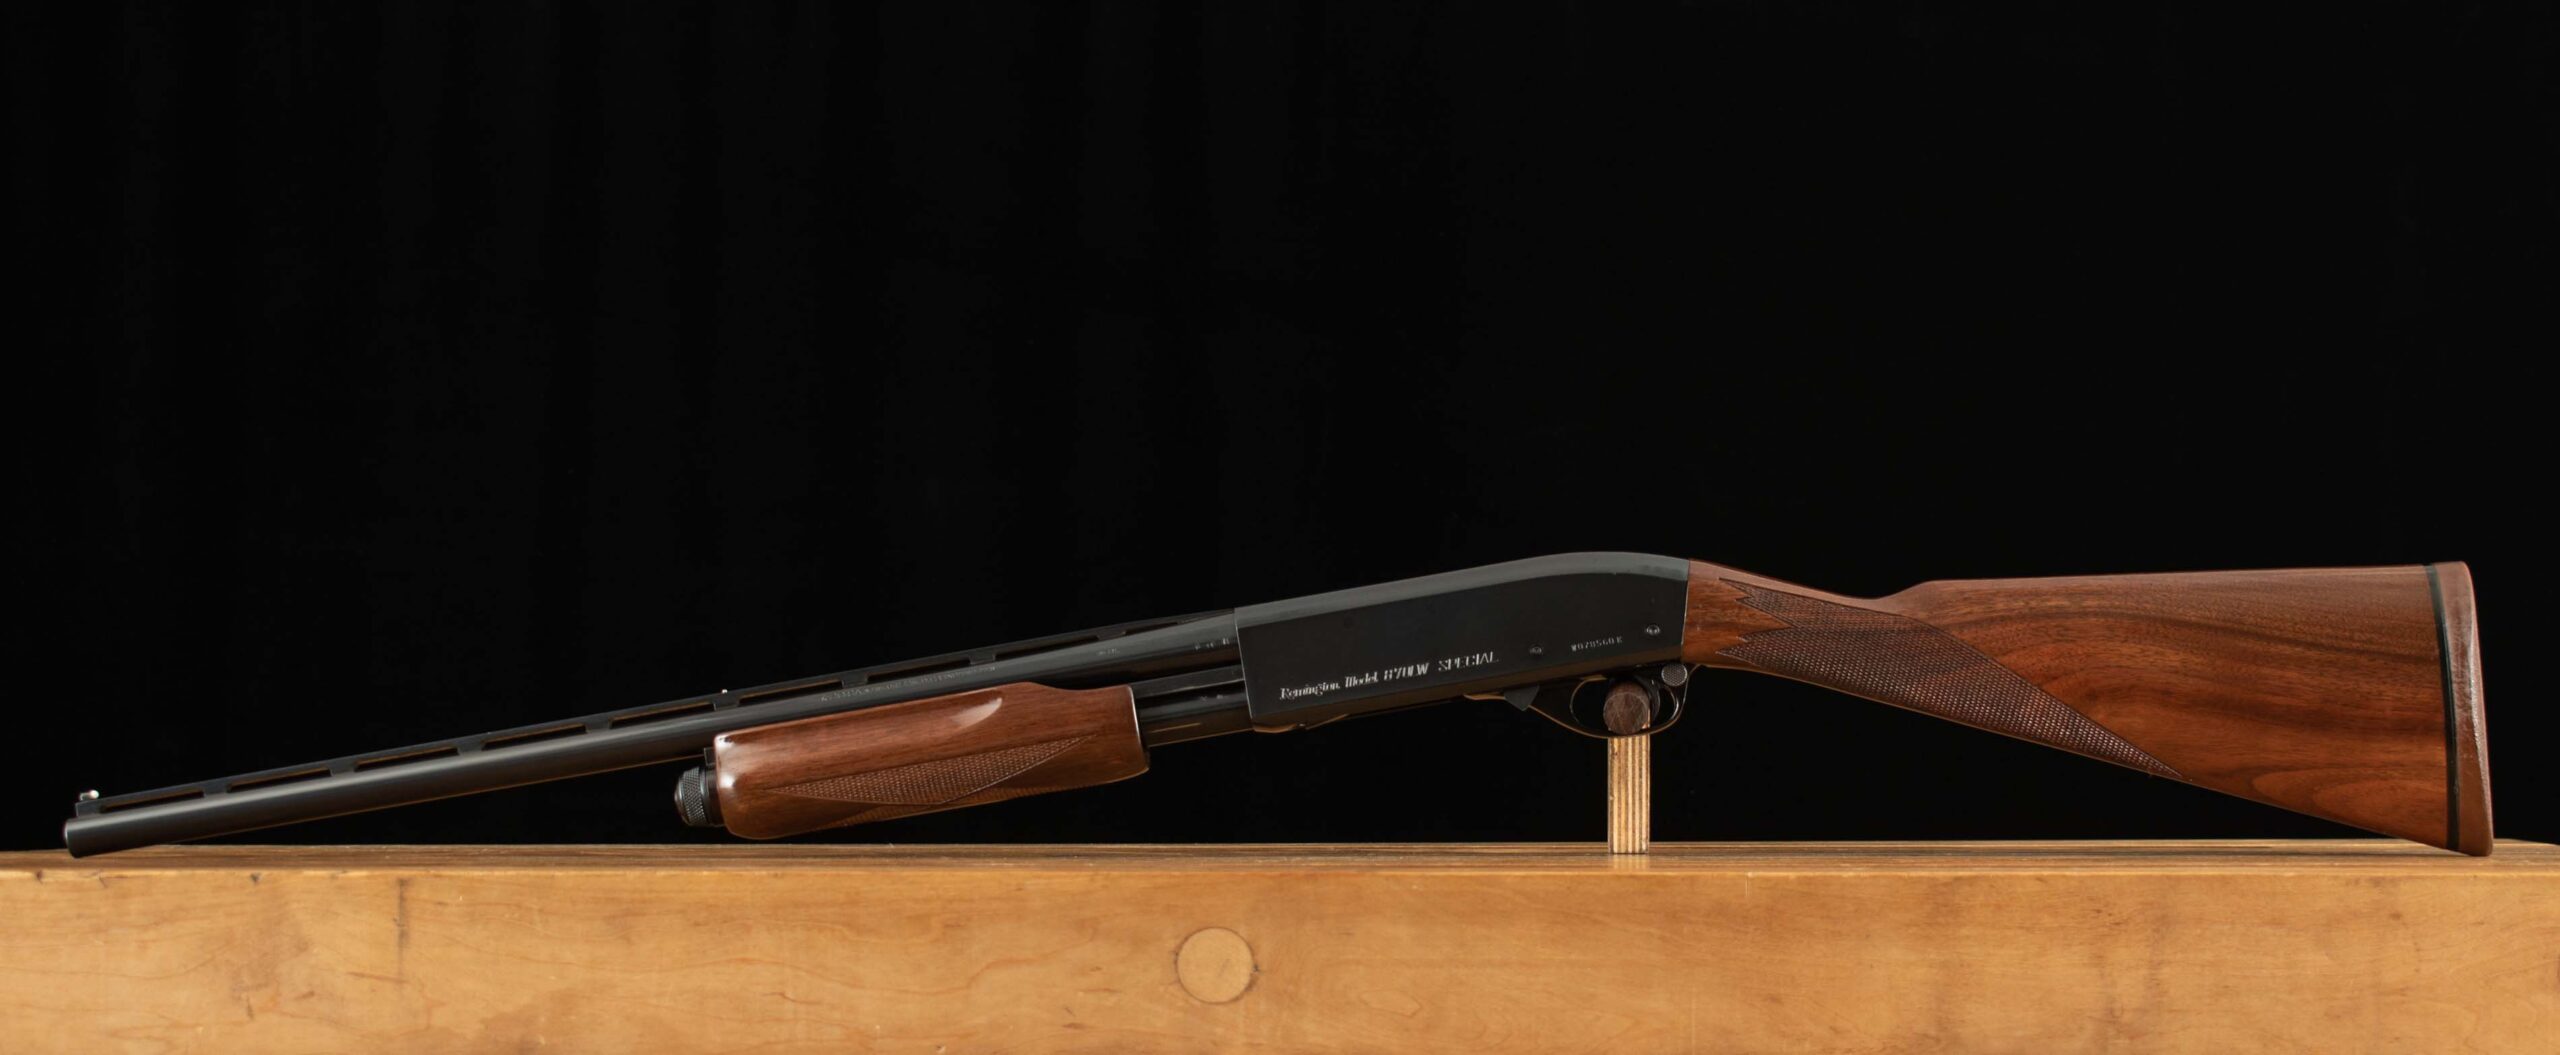 Remington 870 LW Special, 20ga - 1986, 5LBS. 13OZ., 99%